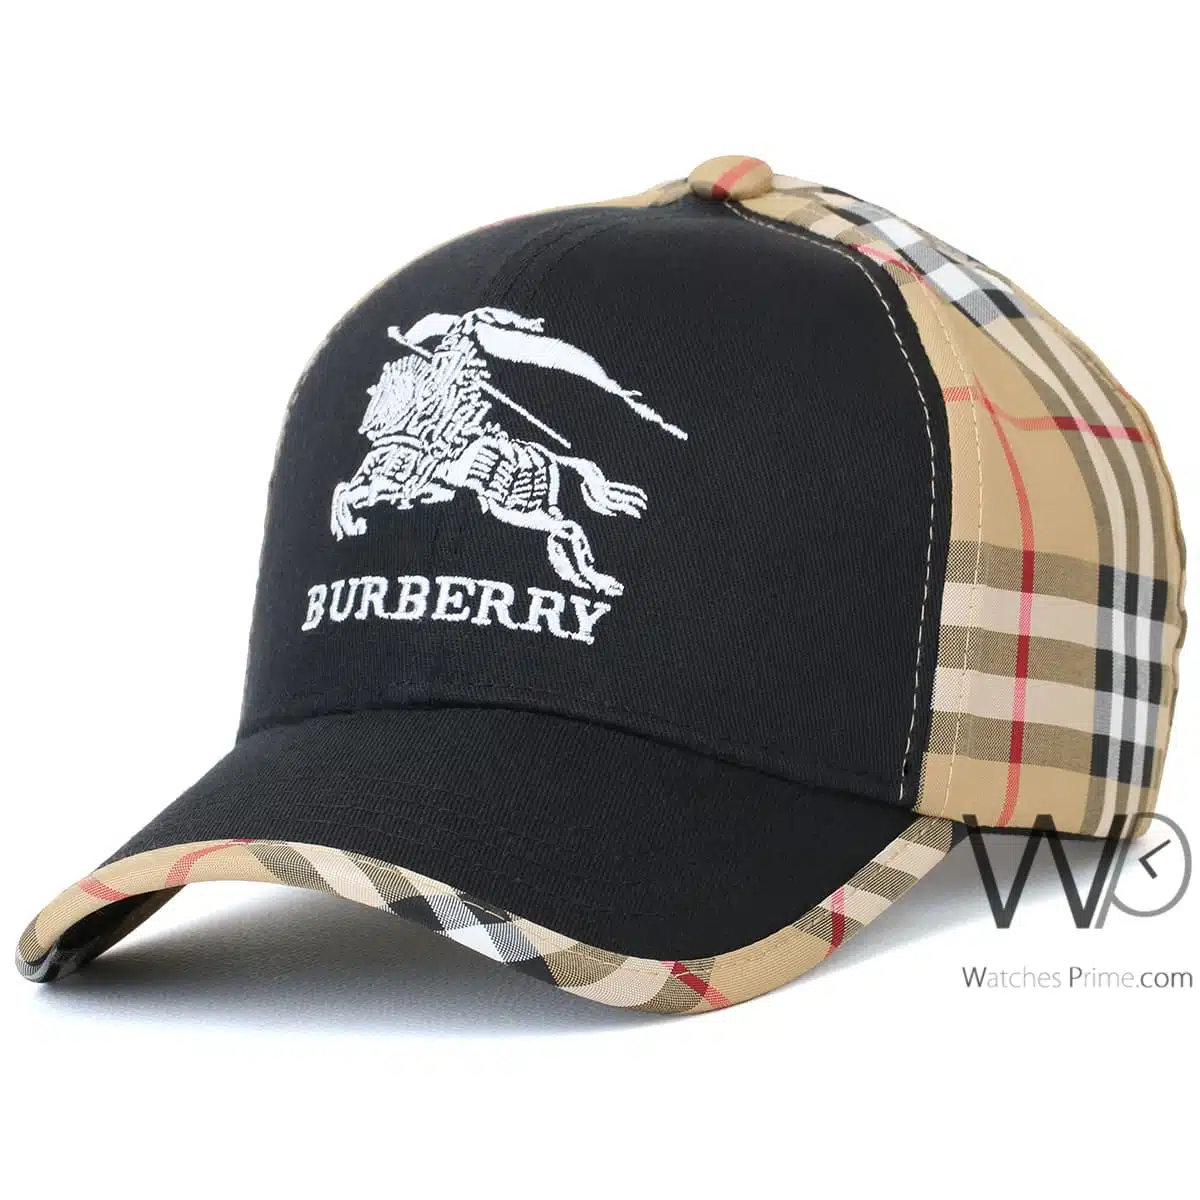 Burberry BT Black Beige Baseball Cap | Watches Prime